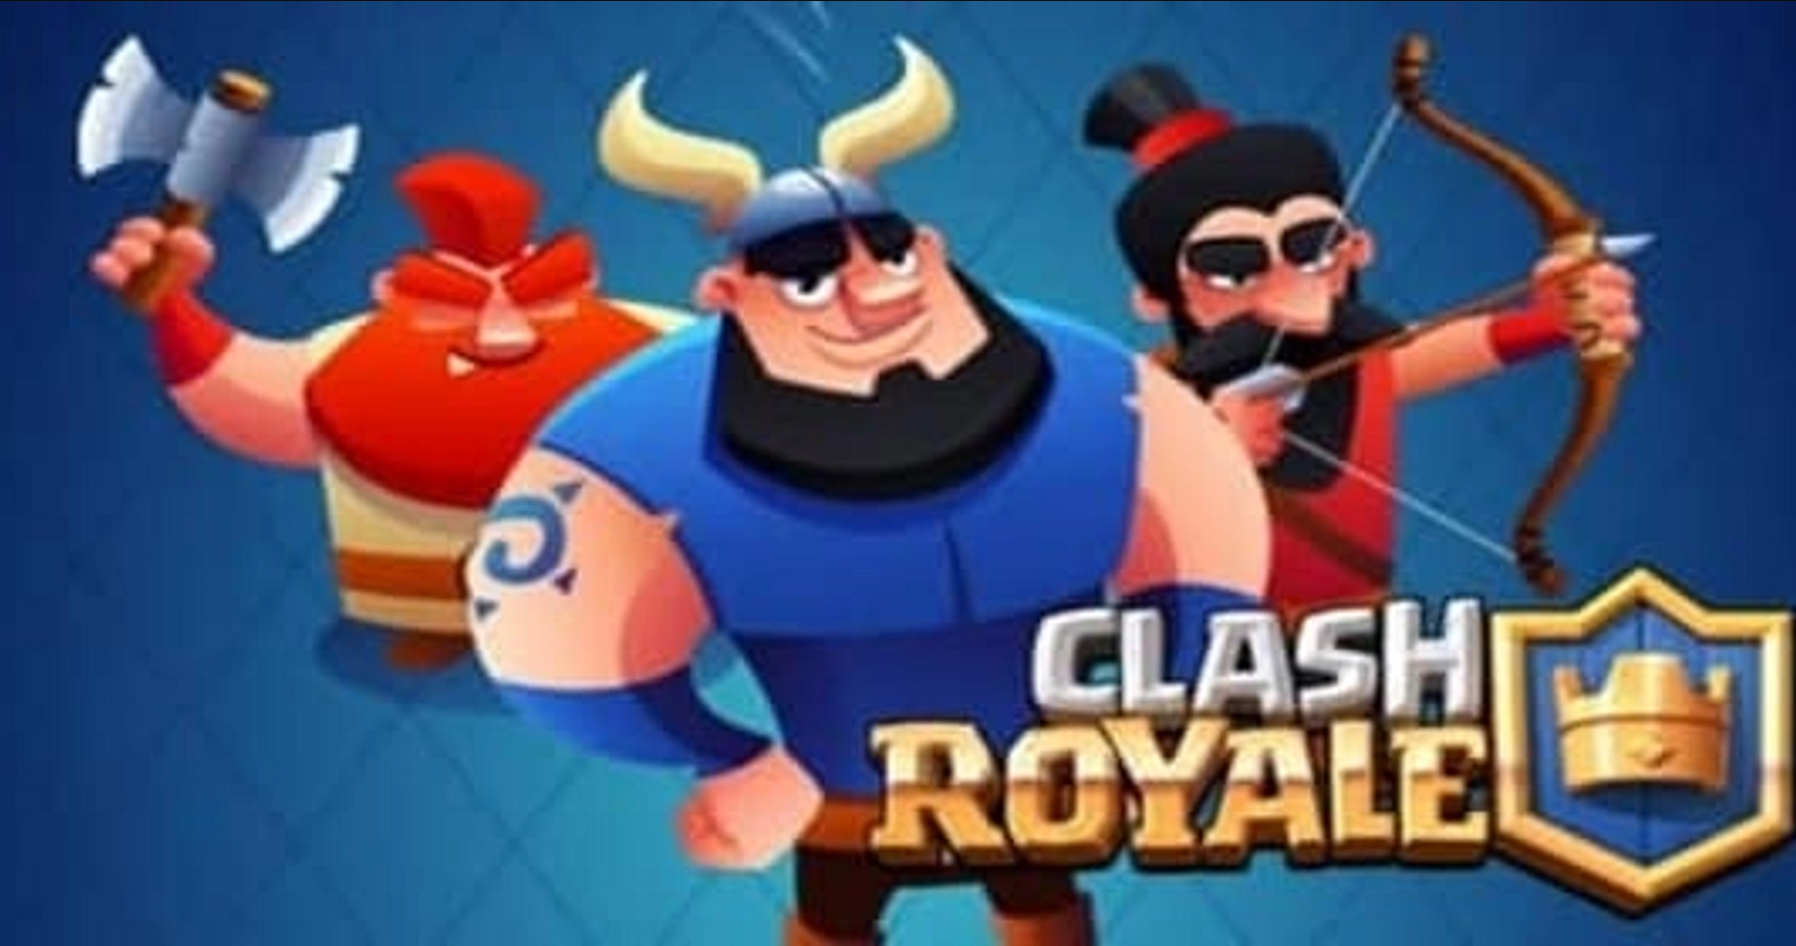 clash royale free